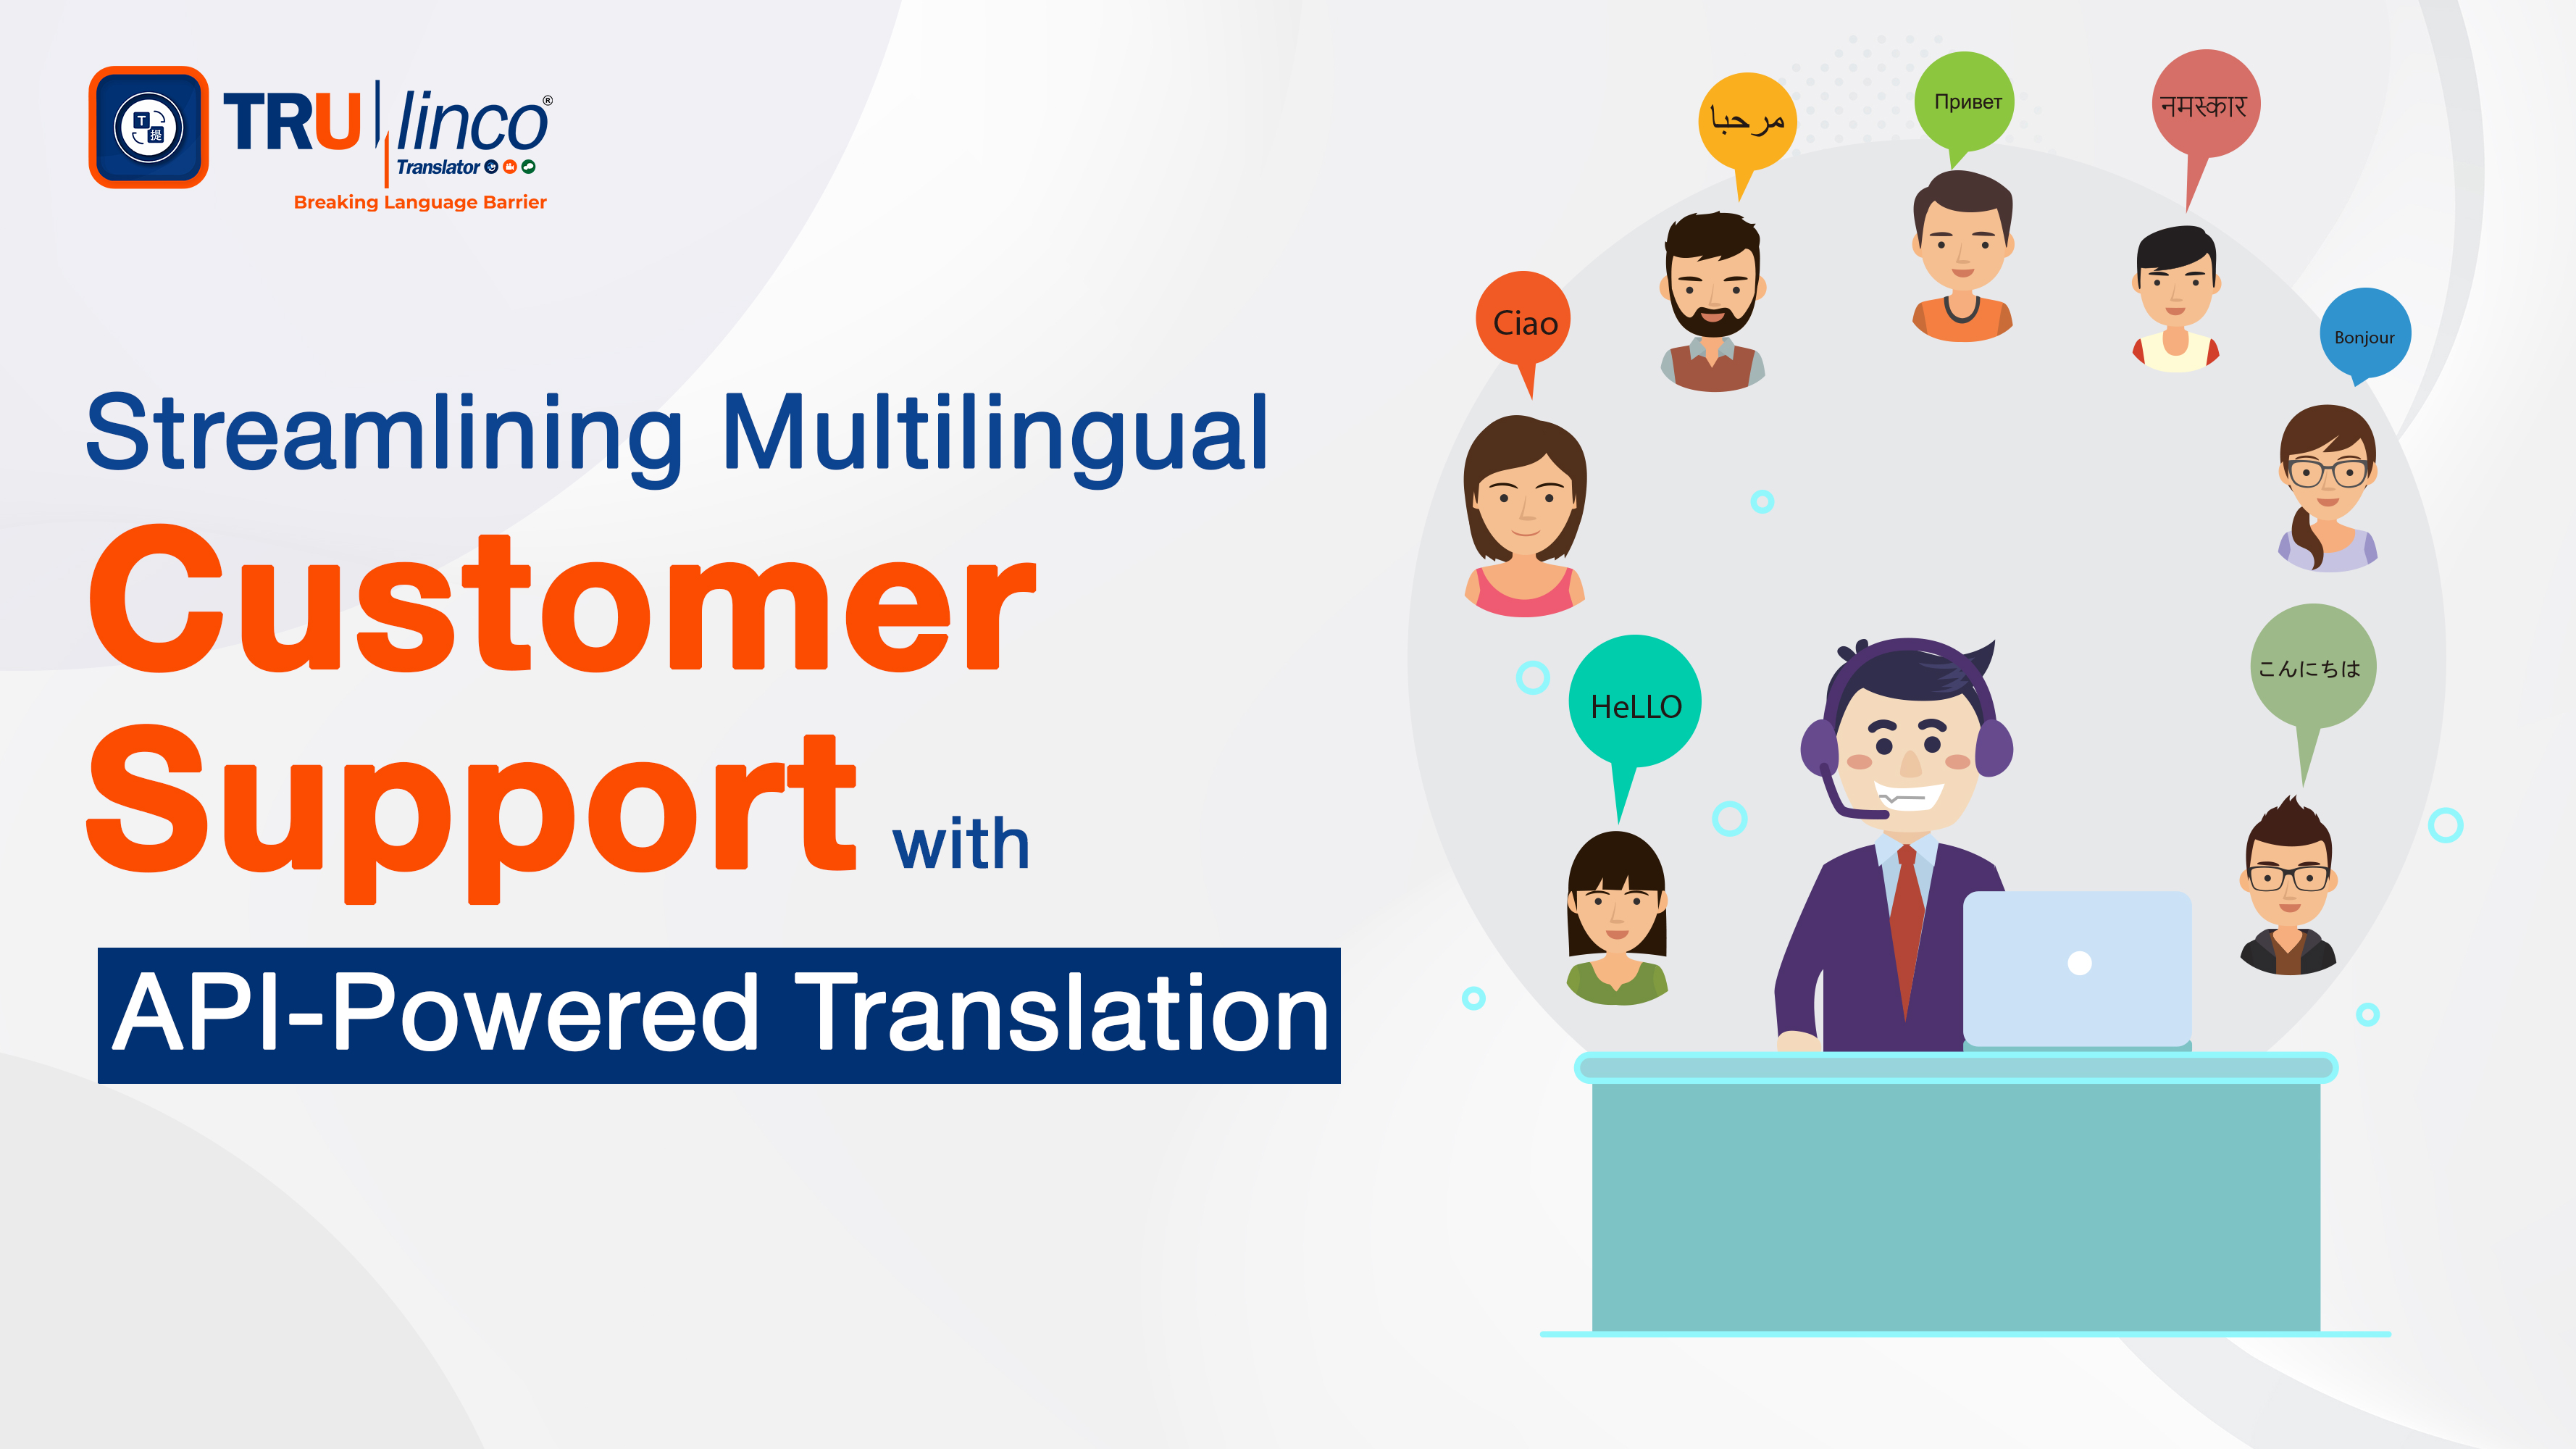 Streamlining Multilingual Customer Support with API-Powered Translation